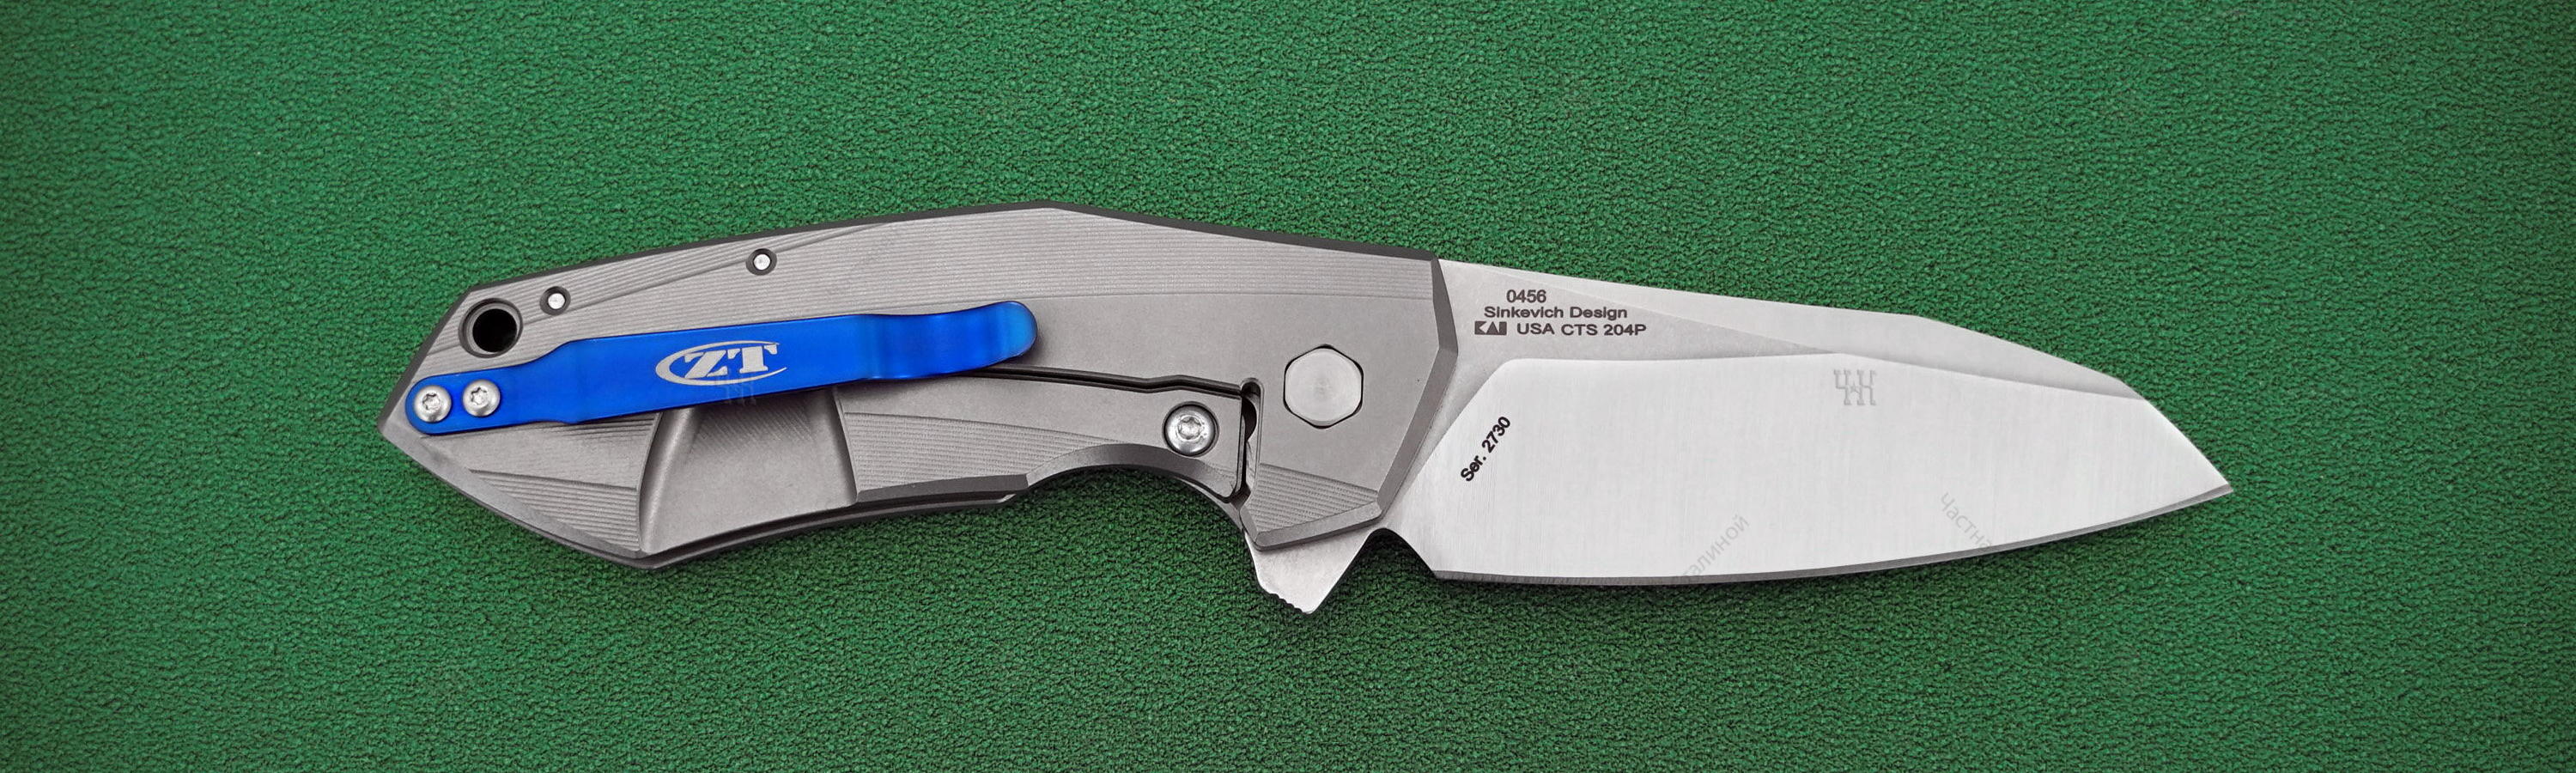 CTS-204P blade